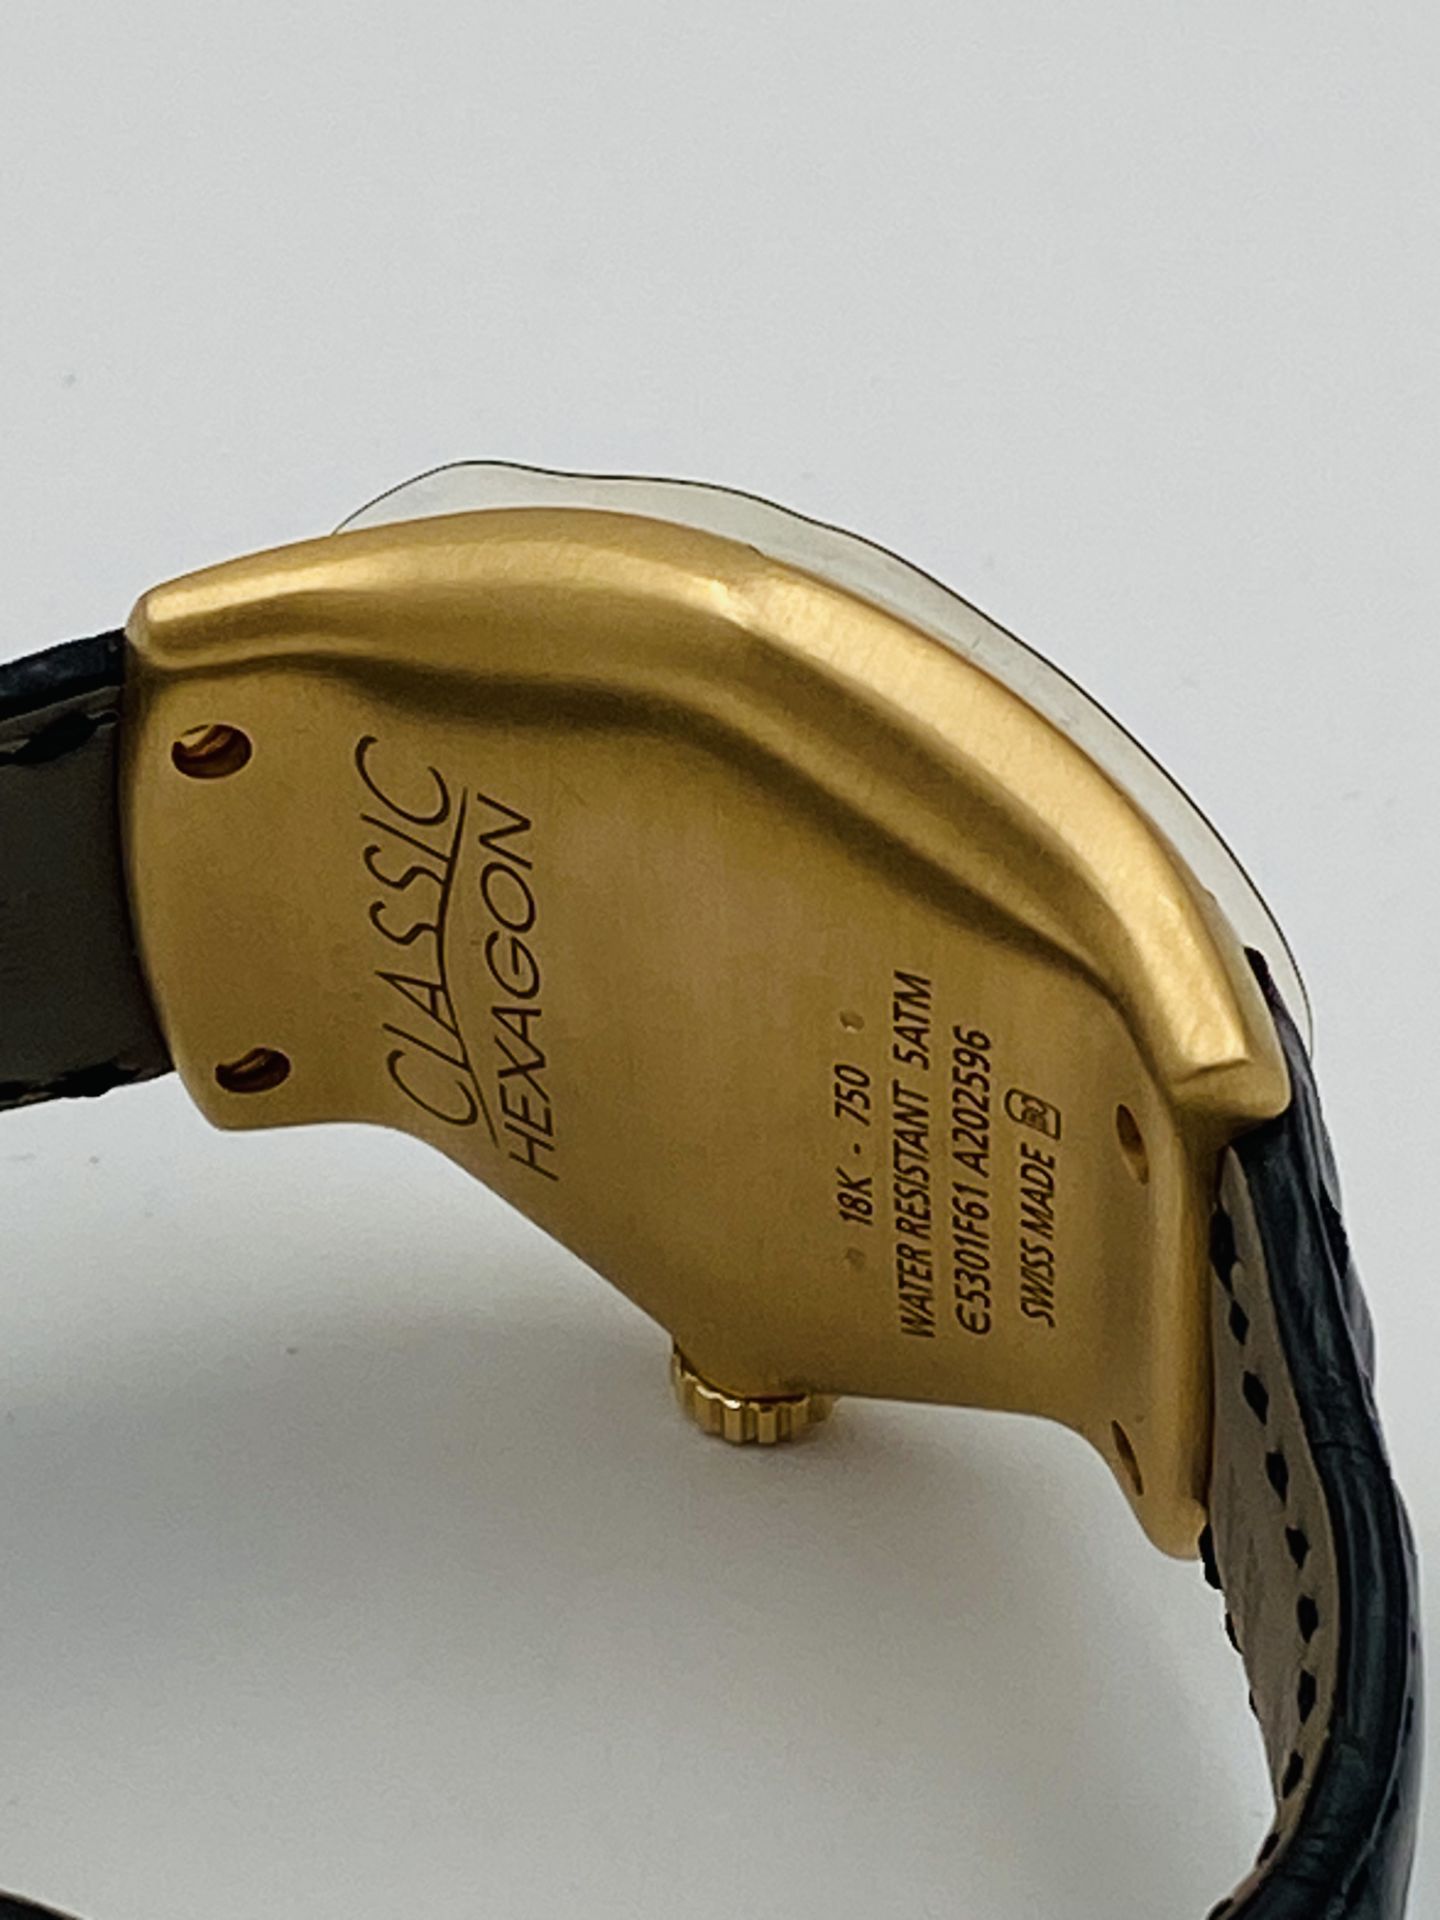 18ct gold Ebel wrist watch - Image 3 of 5